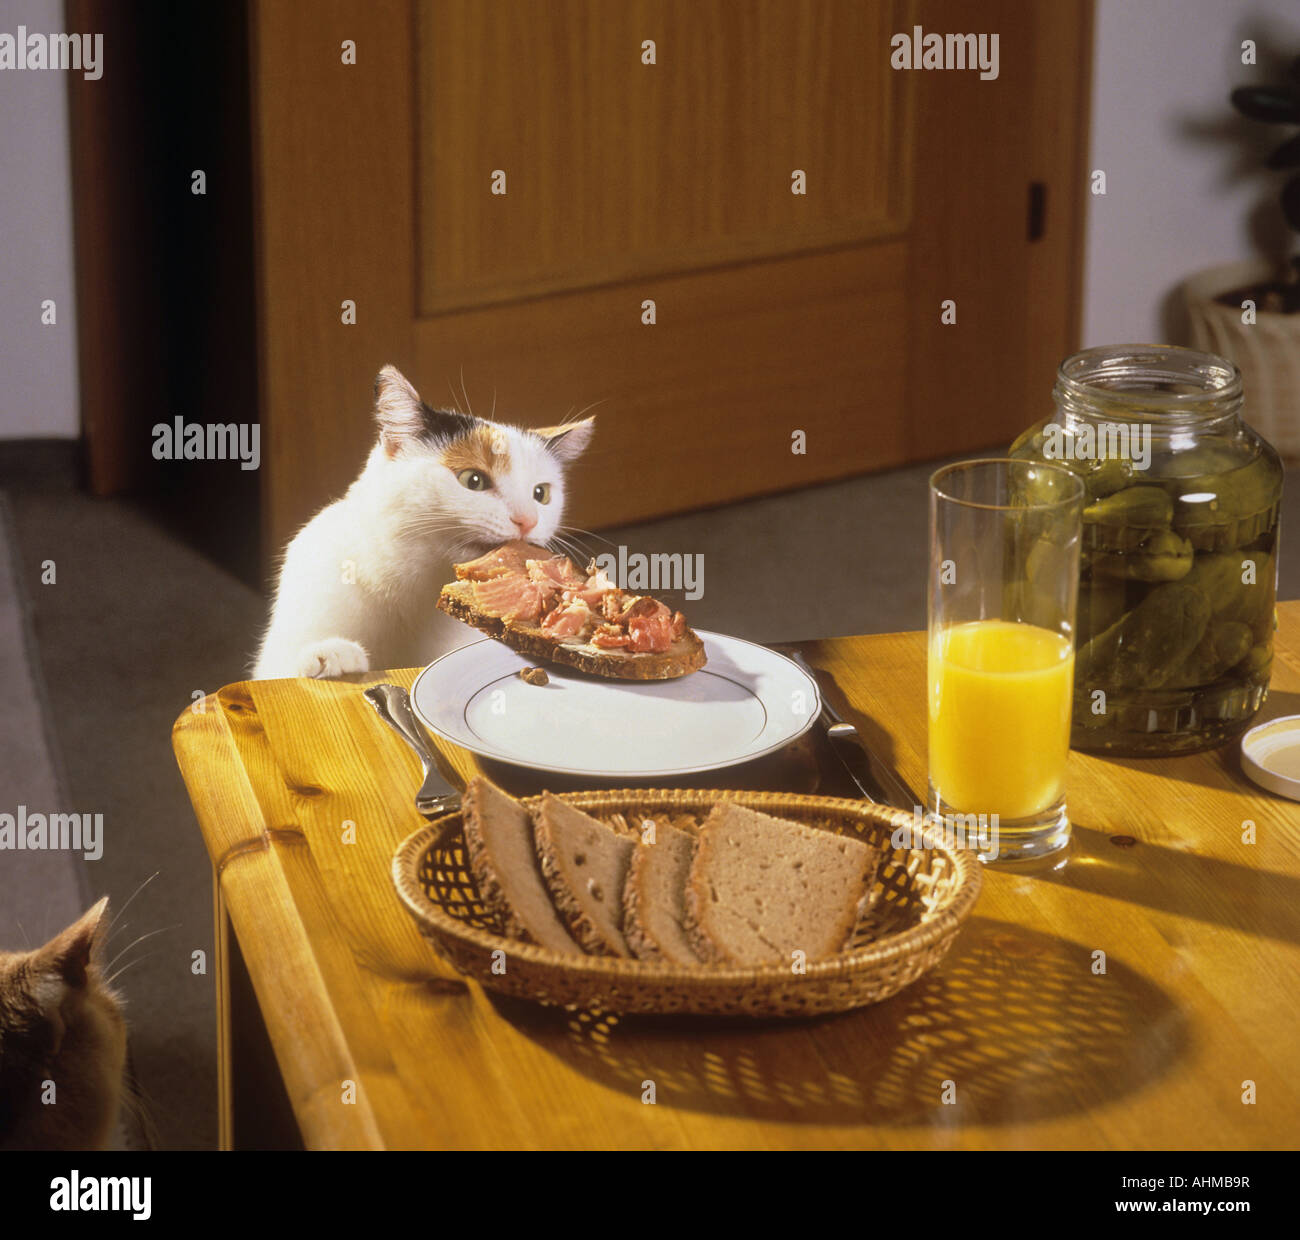 bad habit : cat at table - munching bread Stock Photo